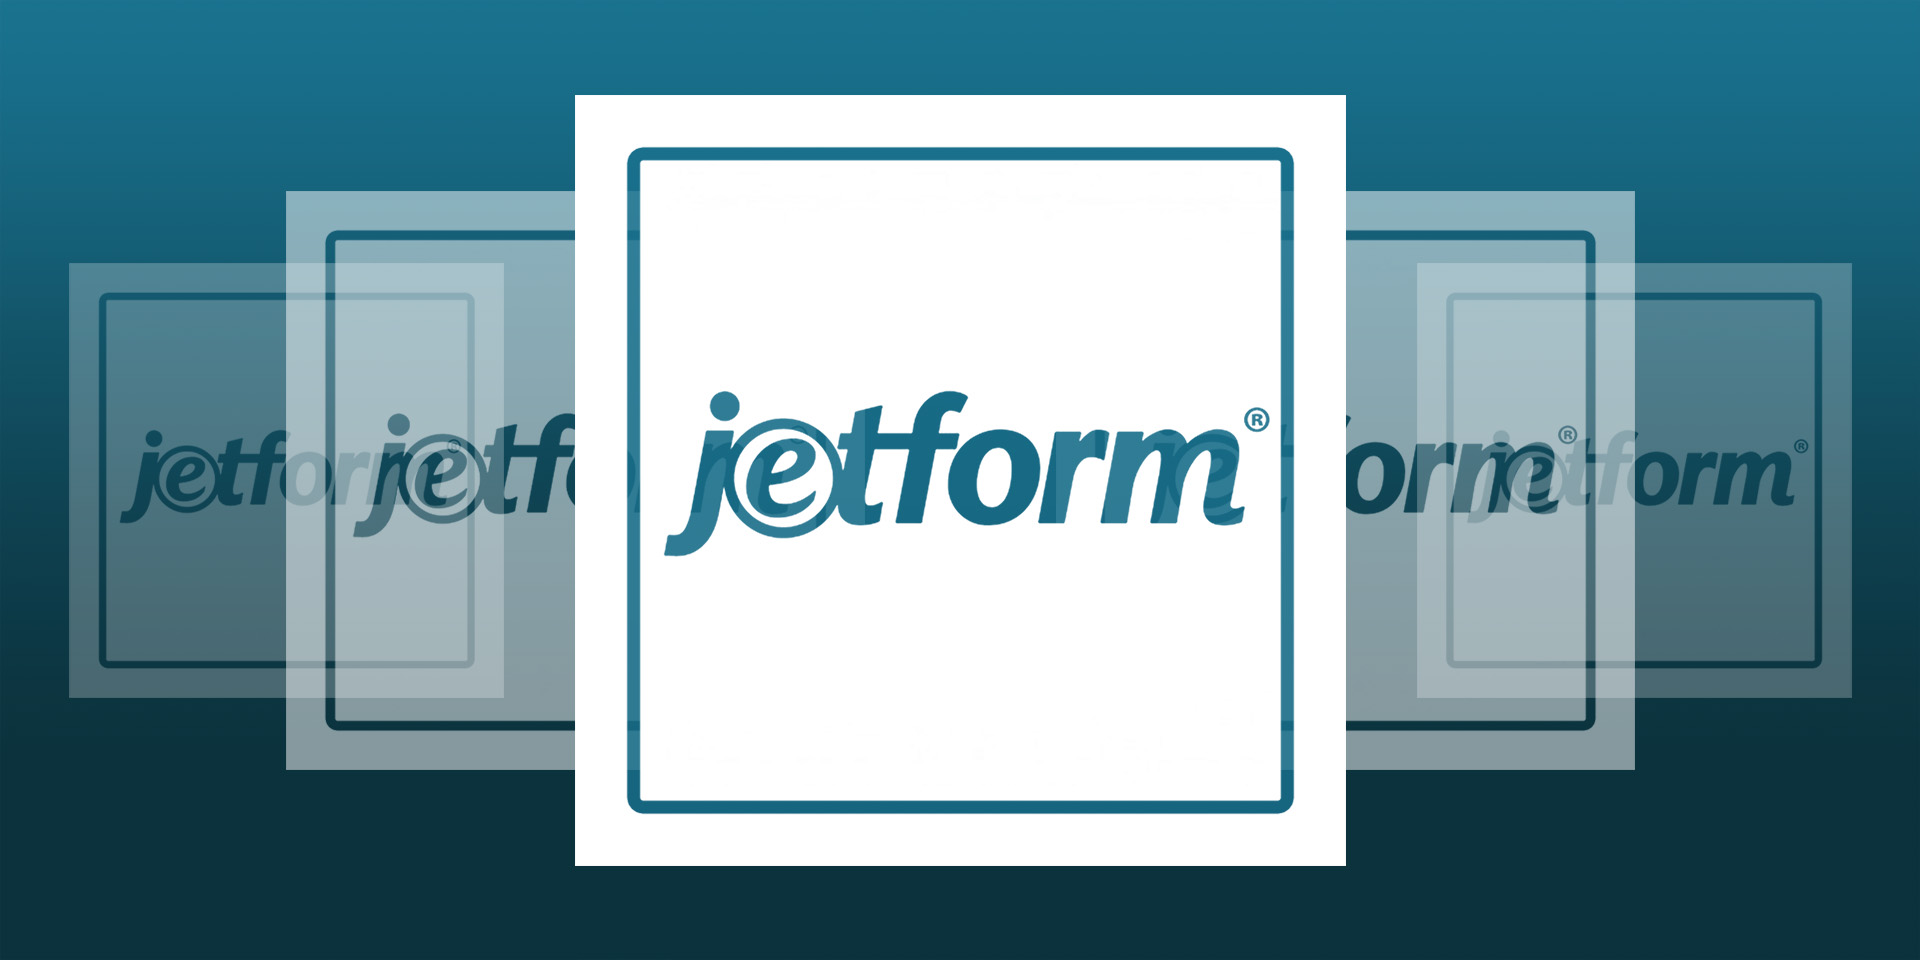 history-of-jetform-and-alternatives